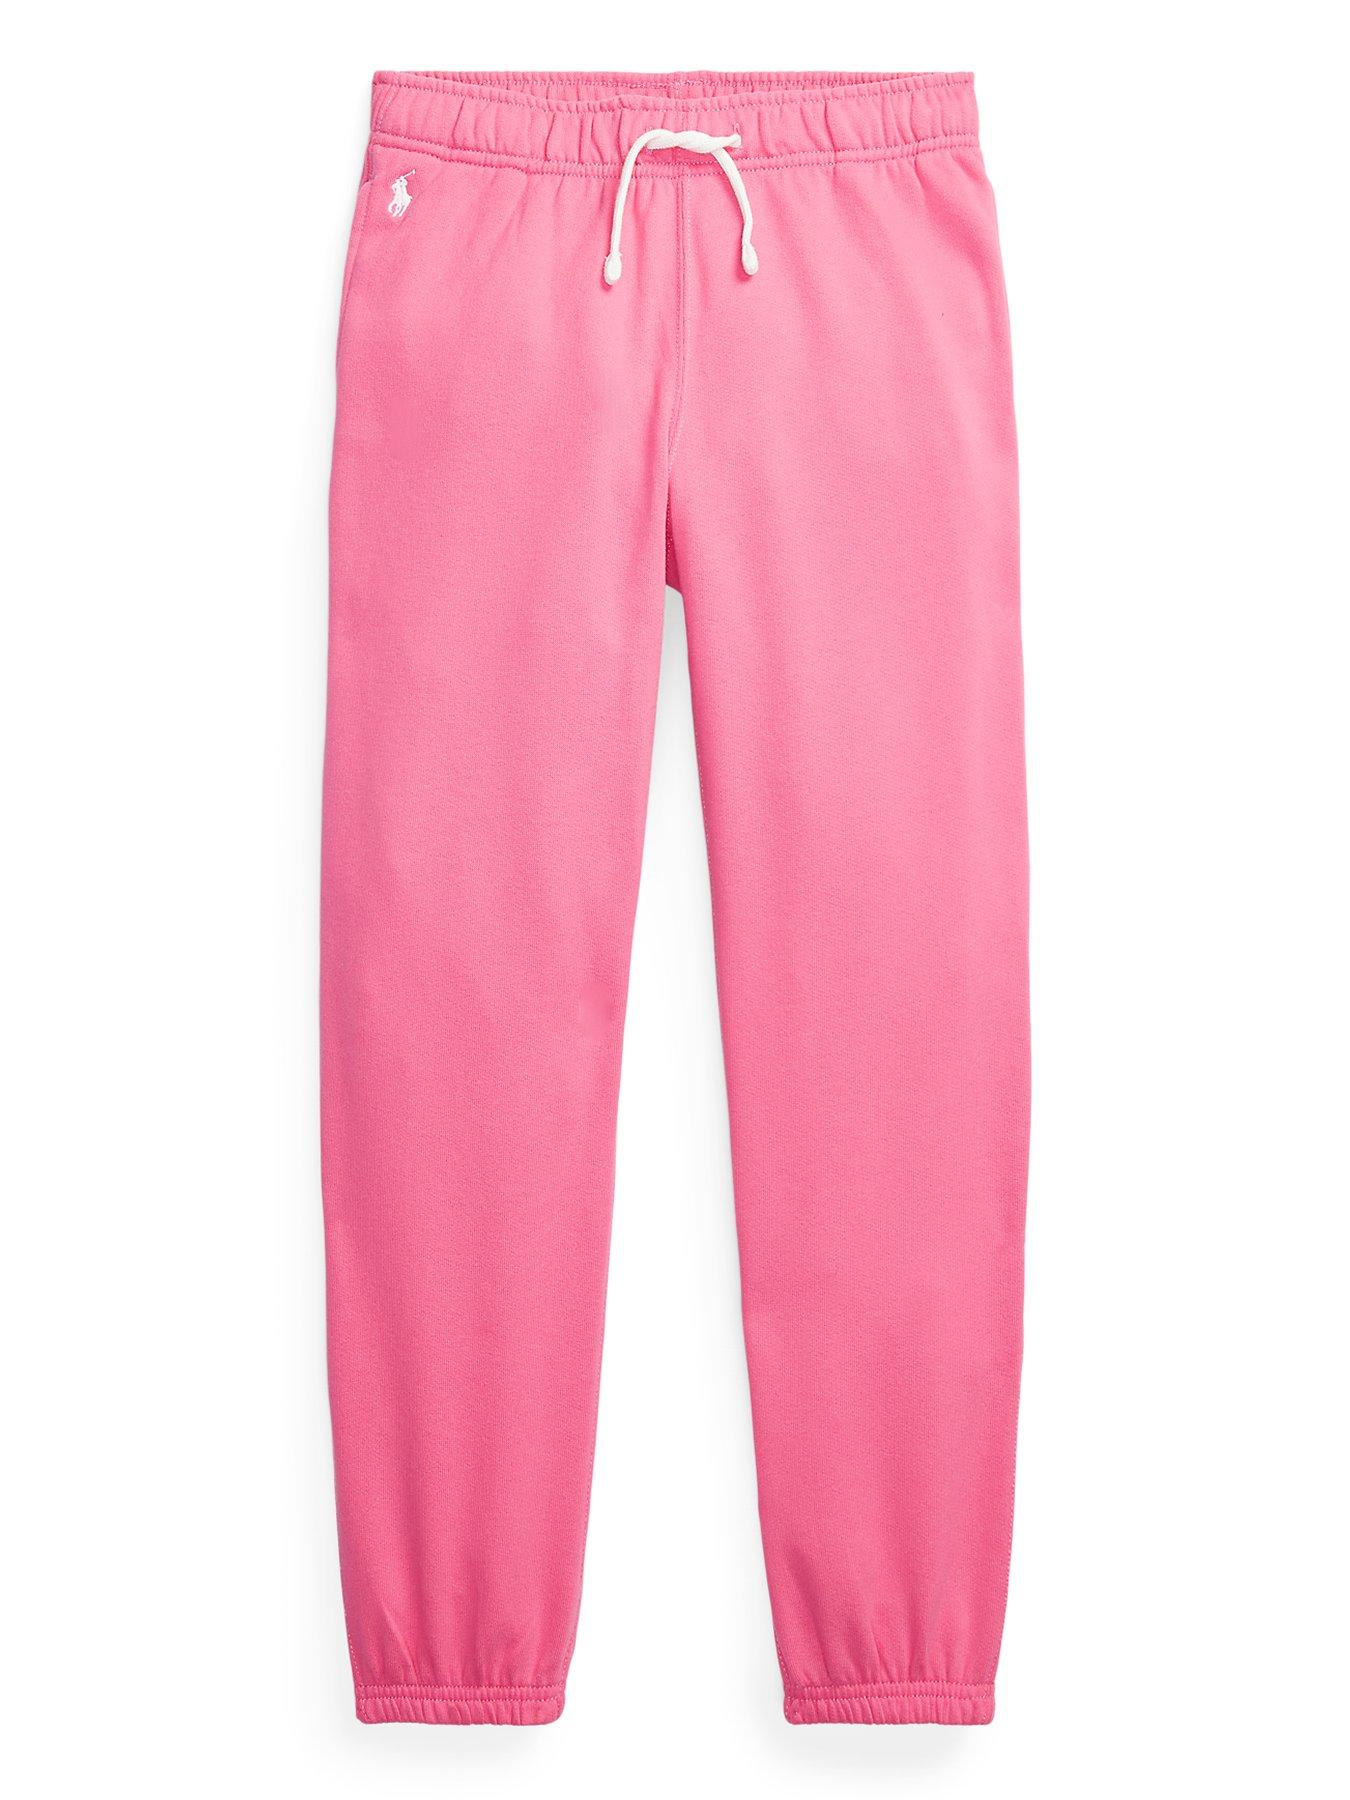 Ralph Lauren Pink Flare Leg Sweatpants - Girls Size M (8-10)